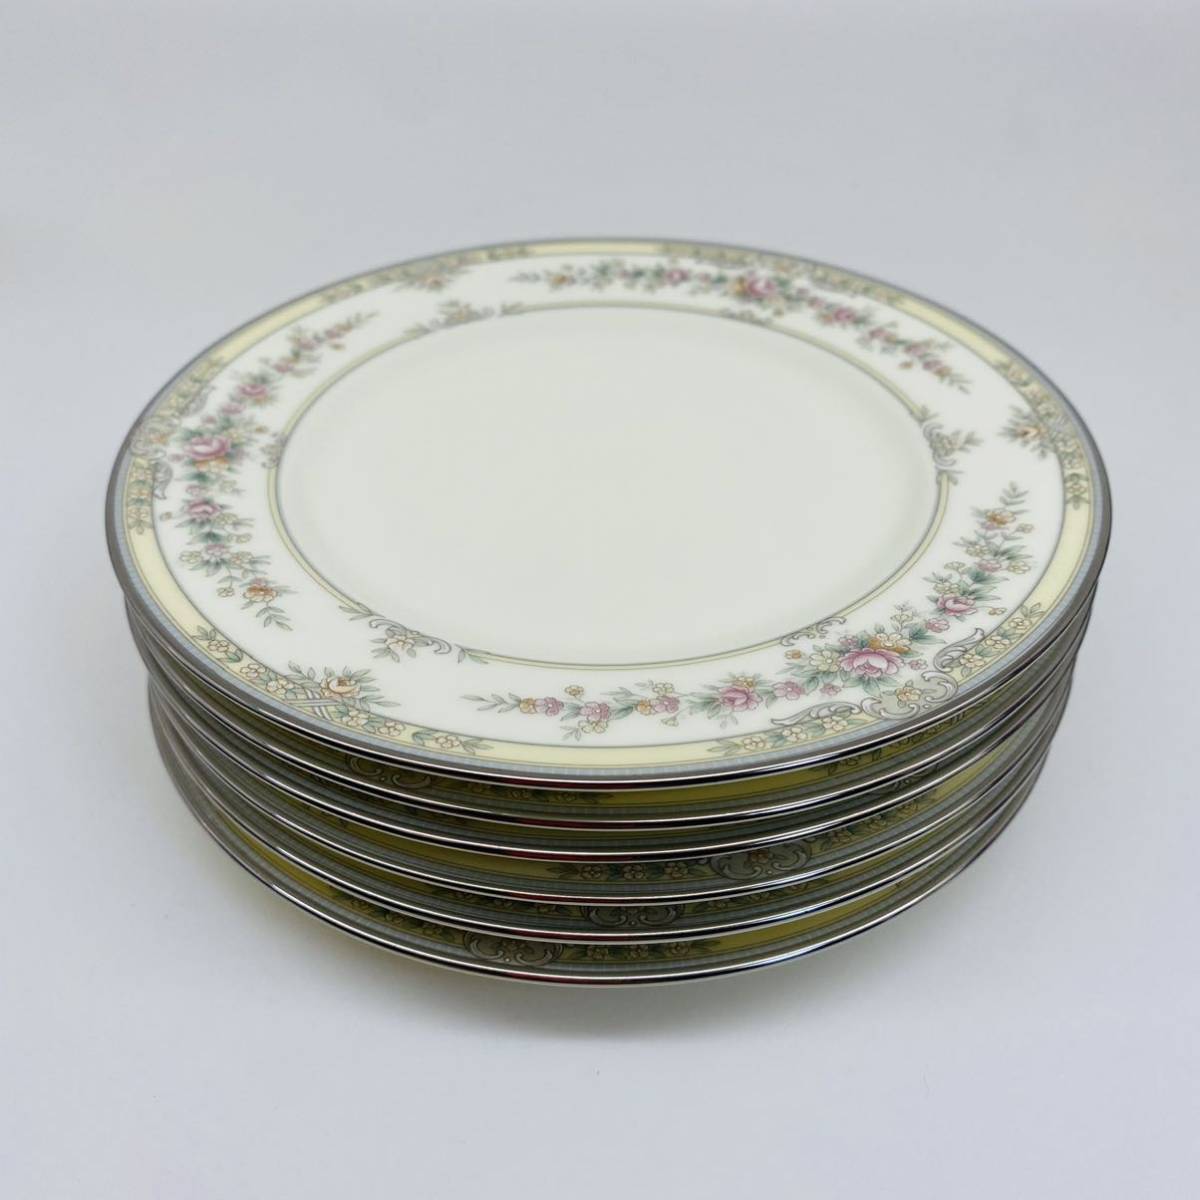 Noritake Shenandoah 9729 bread & butter plate: 6 1/2 diameter ノリタケ シェナンドー パン&バタープレート 6枚Set ☆USED 美品 希少☆_画像1